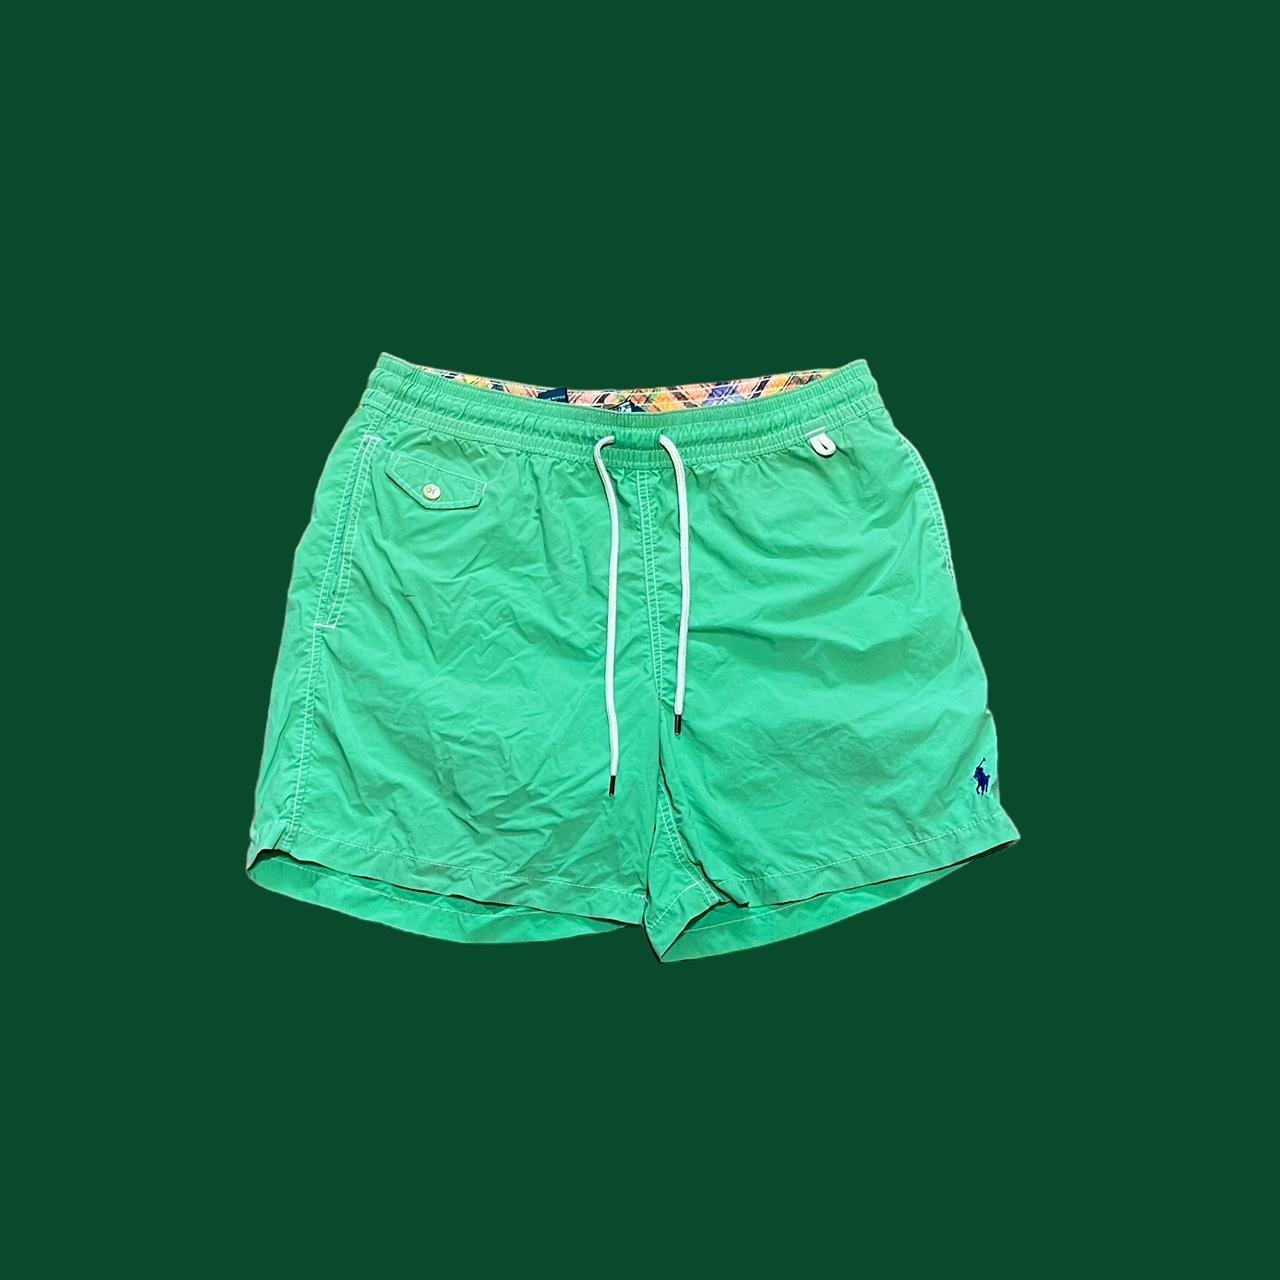 Polo Ralph Lauren Men's Green and White Shorts | Depop